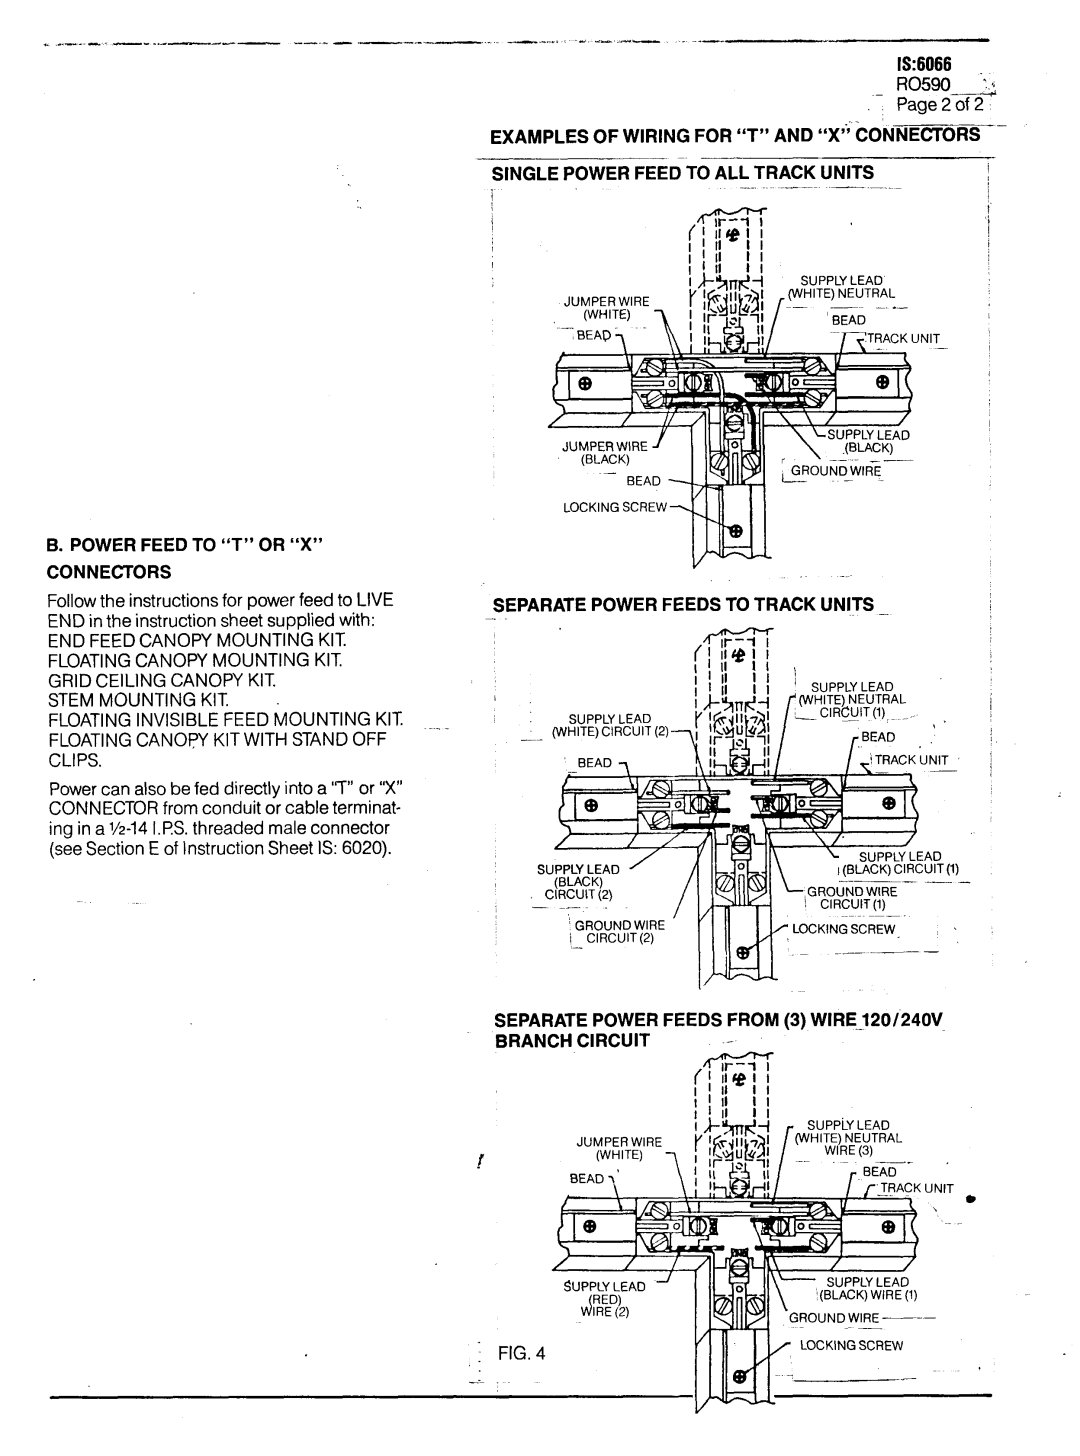 Lightolier instruction sheet 1s:6066 